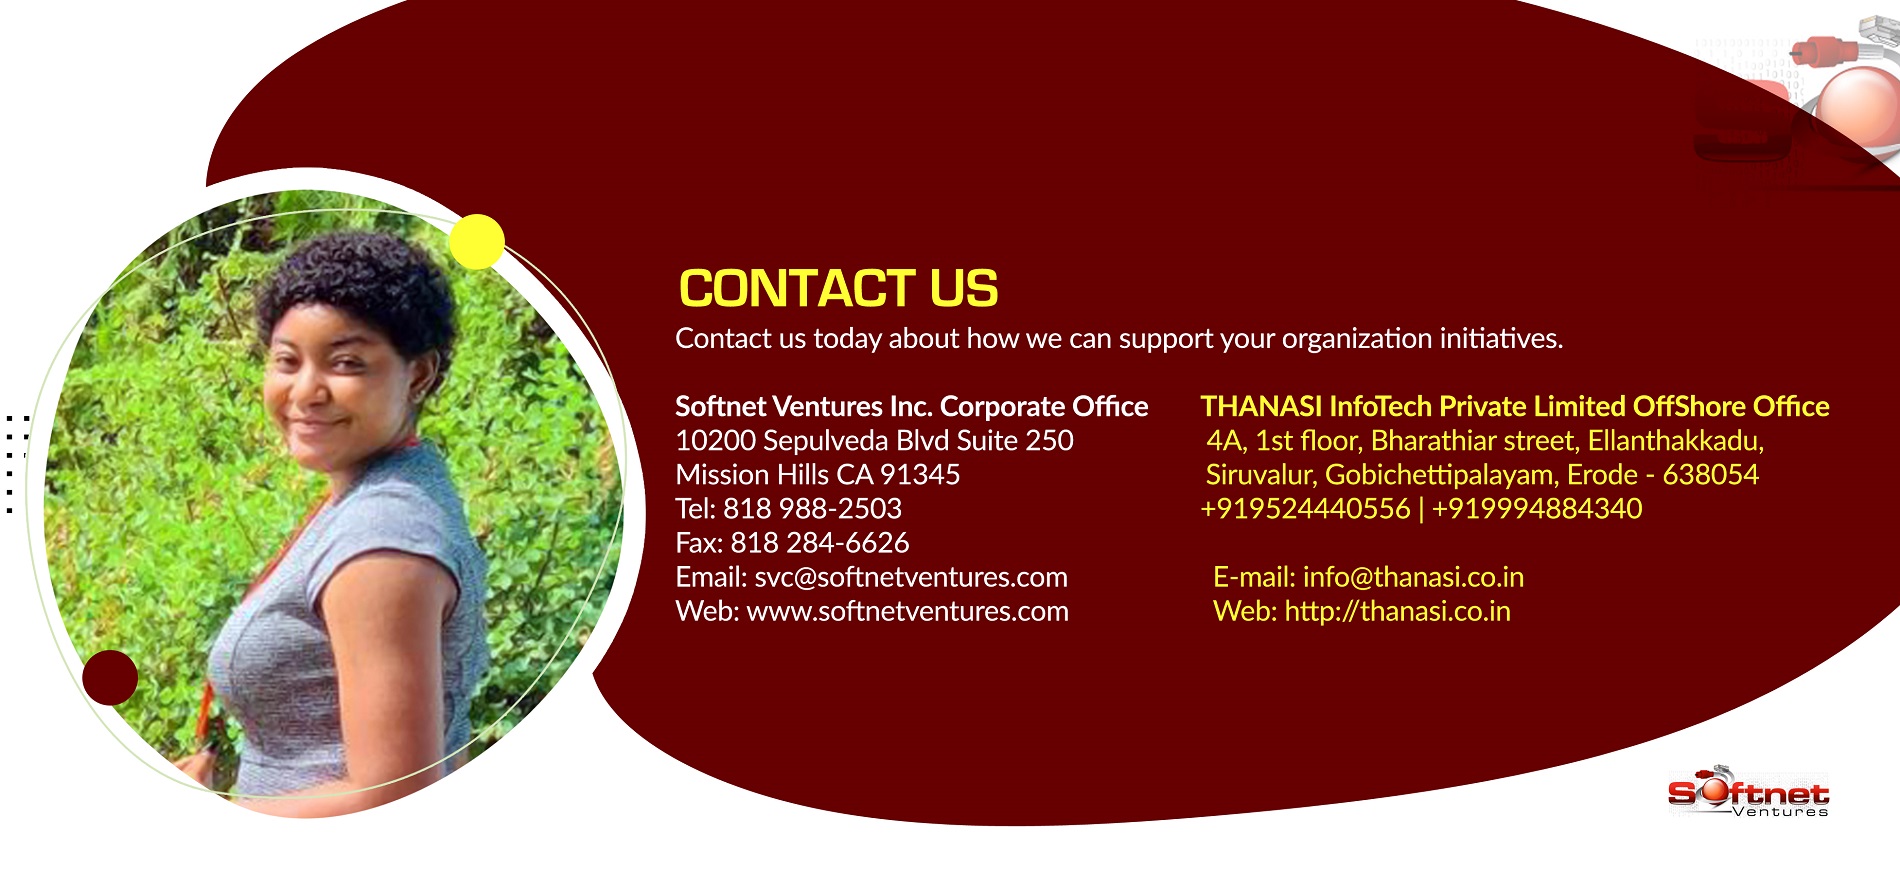 Partner Registered Offshore Office, THANASI InfoTech Private Limited, 4A, Bharathiar Street, Elanthakkadu, Siruvalur PO, Gobhichettipalayam, Erode-638054